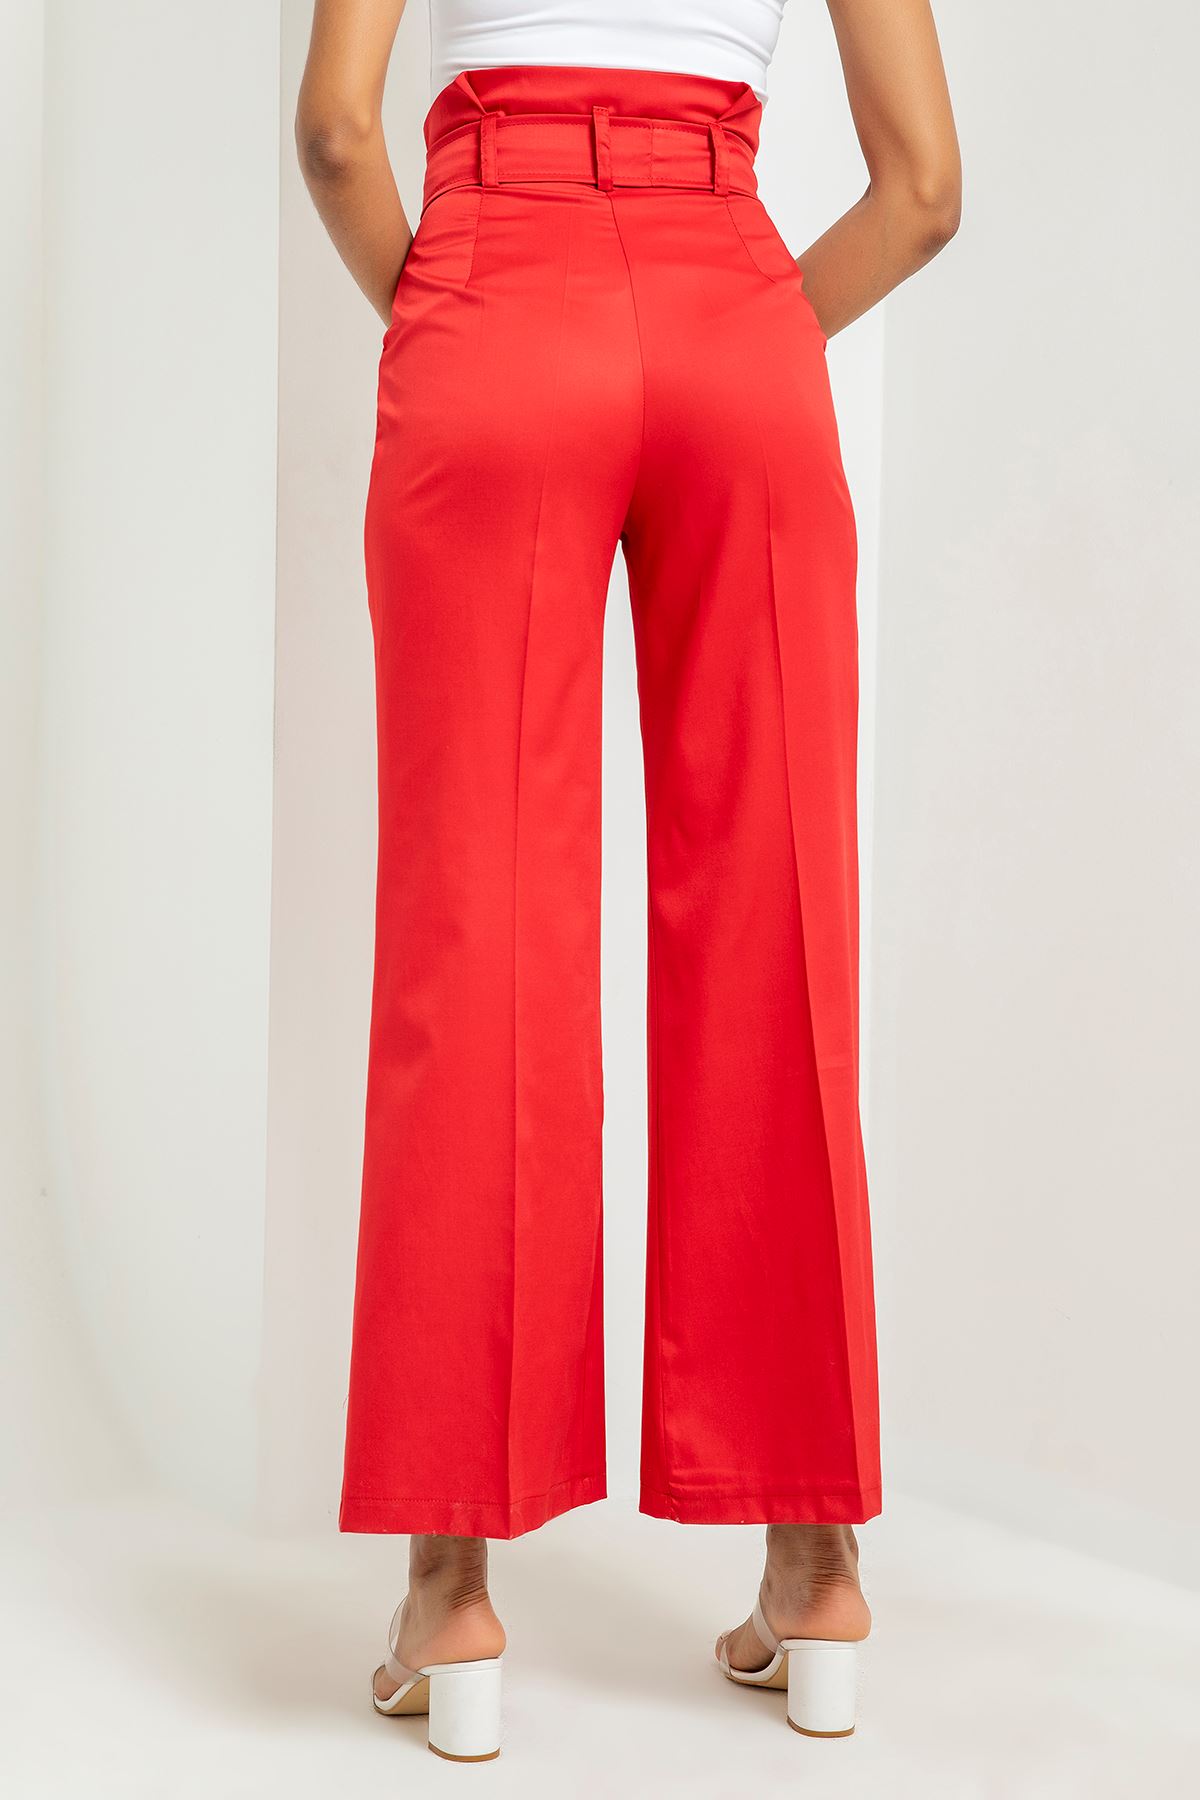 Aerobin Fabric Short Sleeve Ruffled Collar Comfy Fit Women Dress - Red